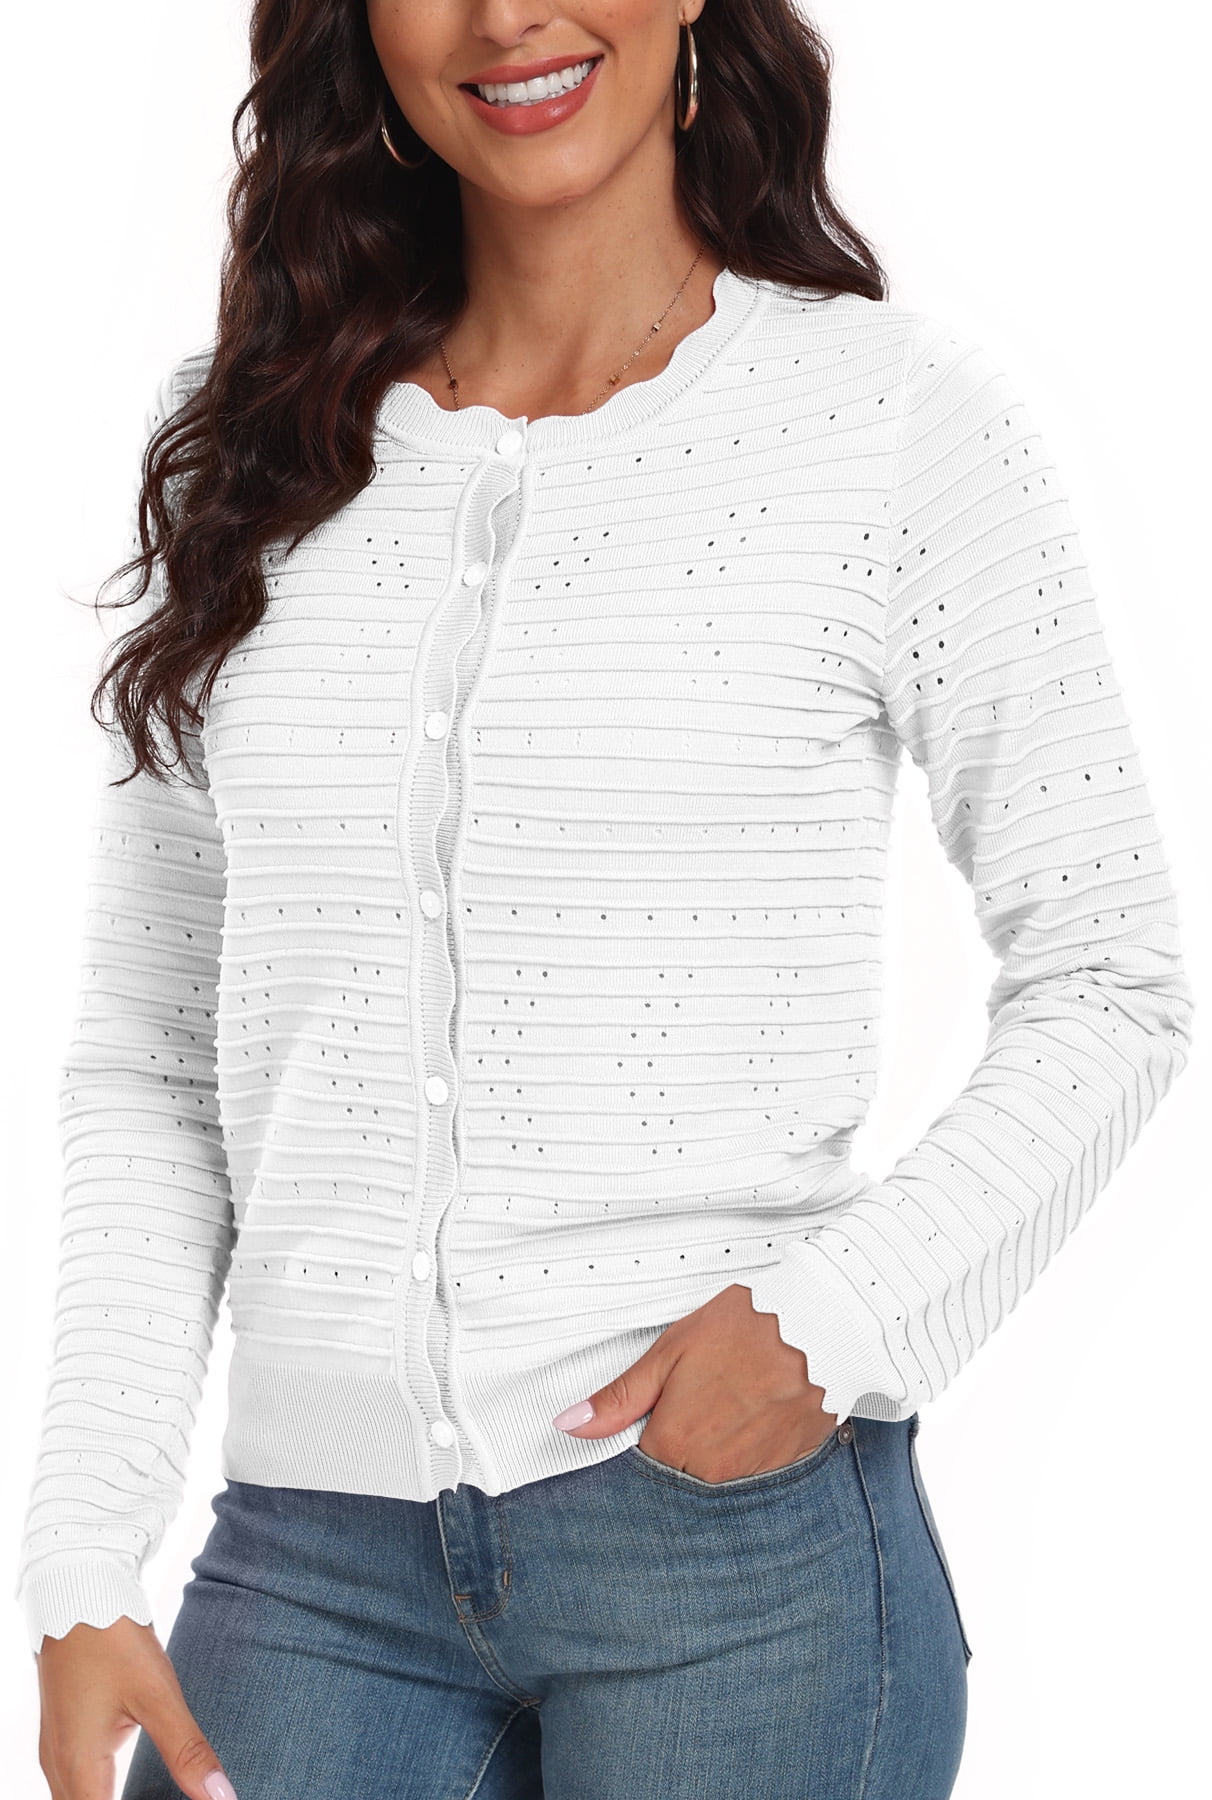 Aiyino Women's Long Sleeve Knit Cardigan Sweater Basic V Neck Button ...